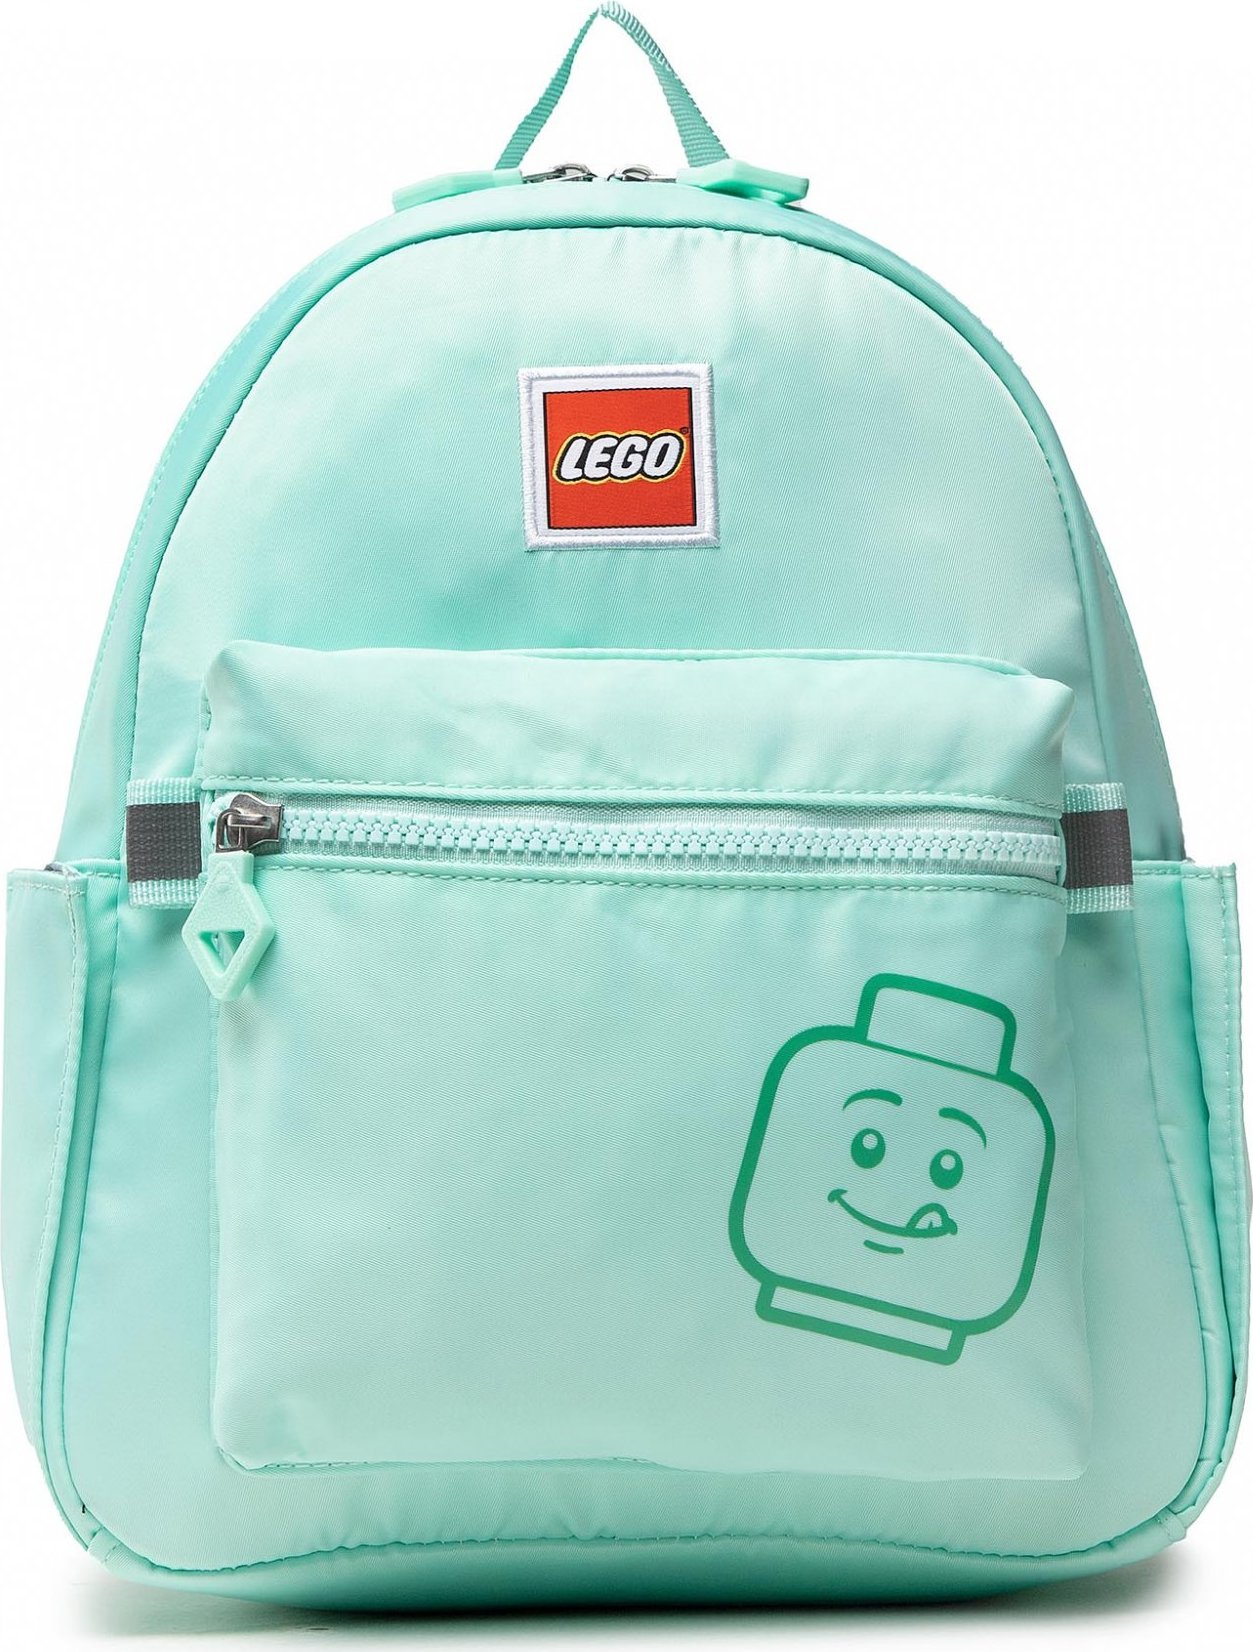 LEGO Tribini Joy Backpack Small 20129-1938